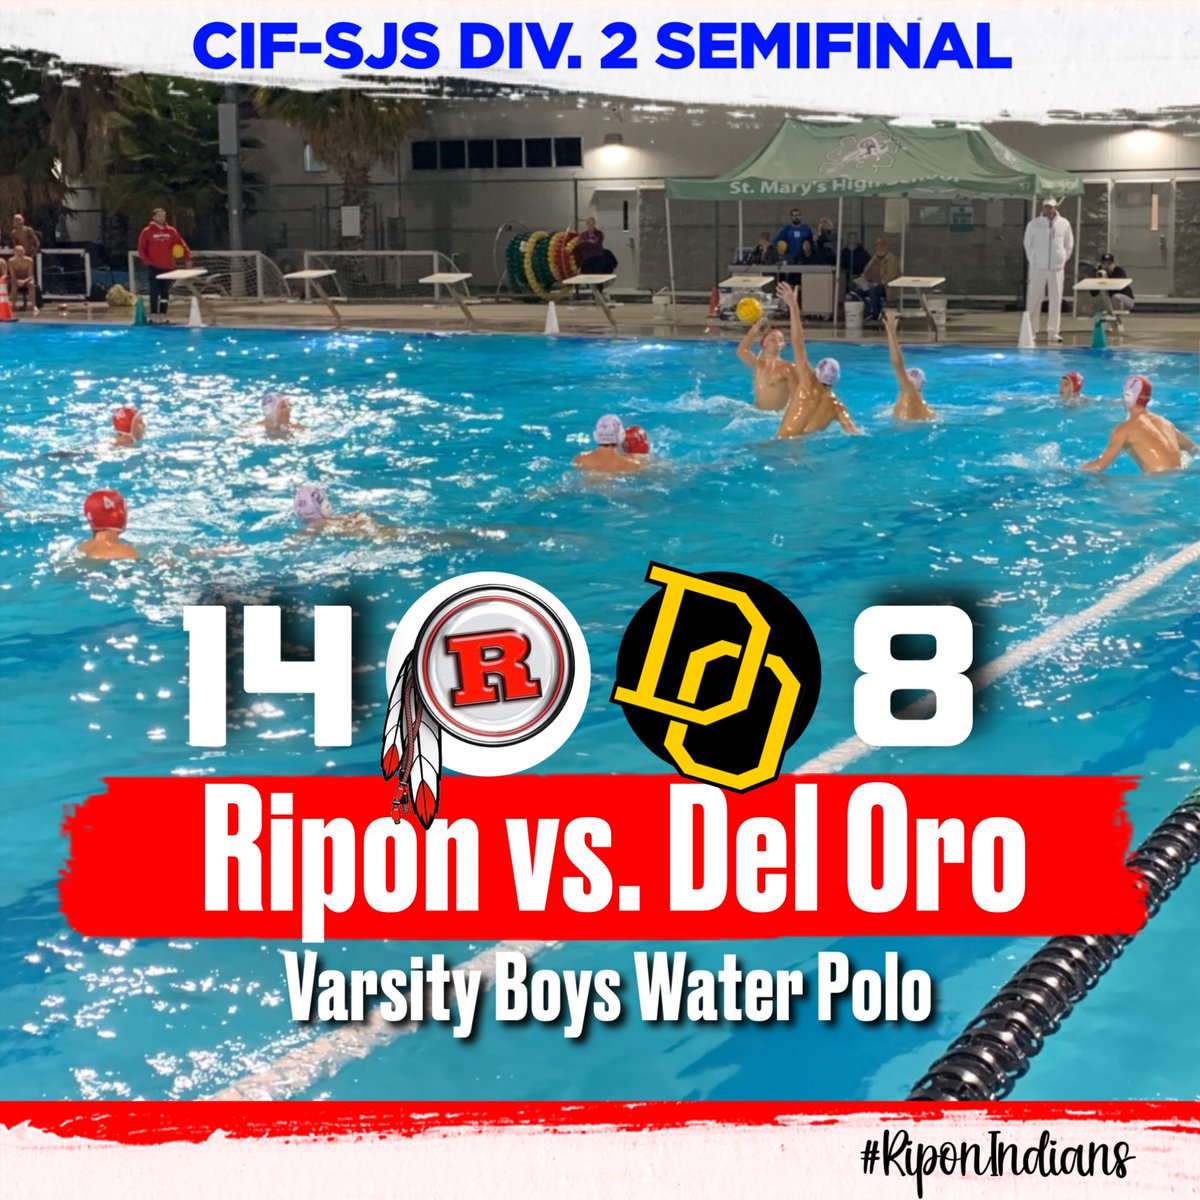 Ripon Boys Water Polo advances to D2 Section Finals @MantecaSports @Quade1095 @ShannonBelt3 @westcoastpreps_  @deloroathletics @NMPecoraro @SacBee_JoeD @cifsjs #RiponIndians